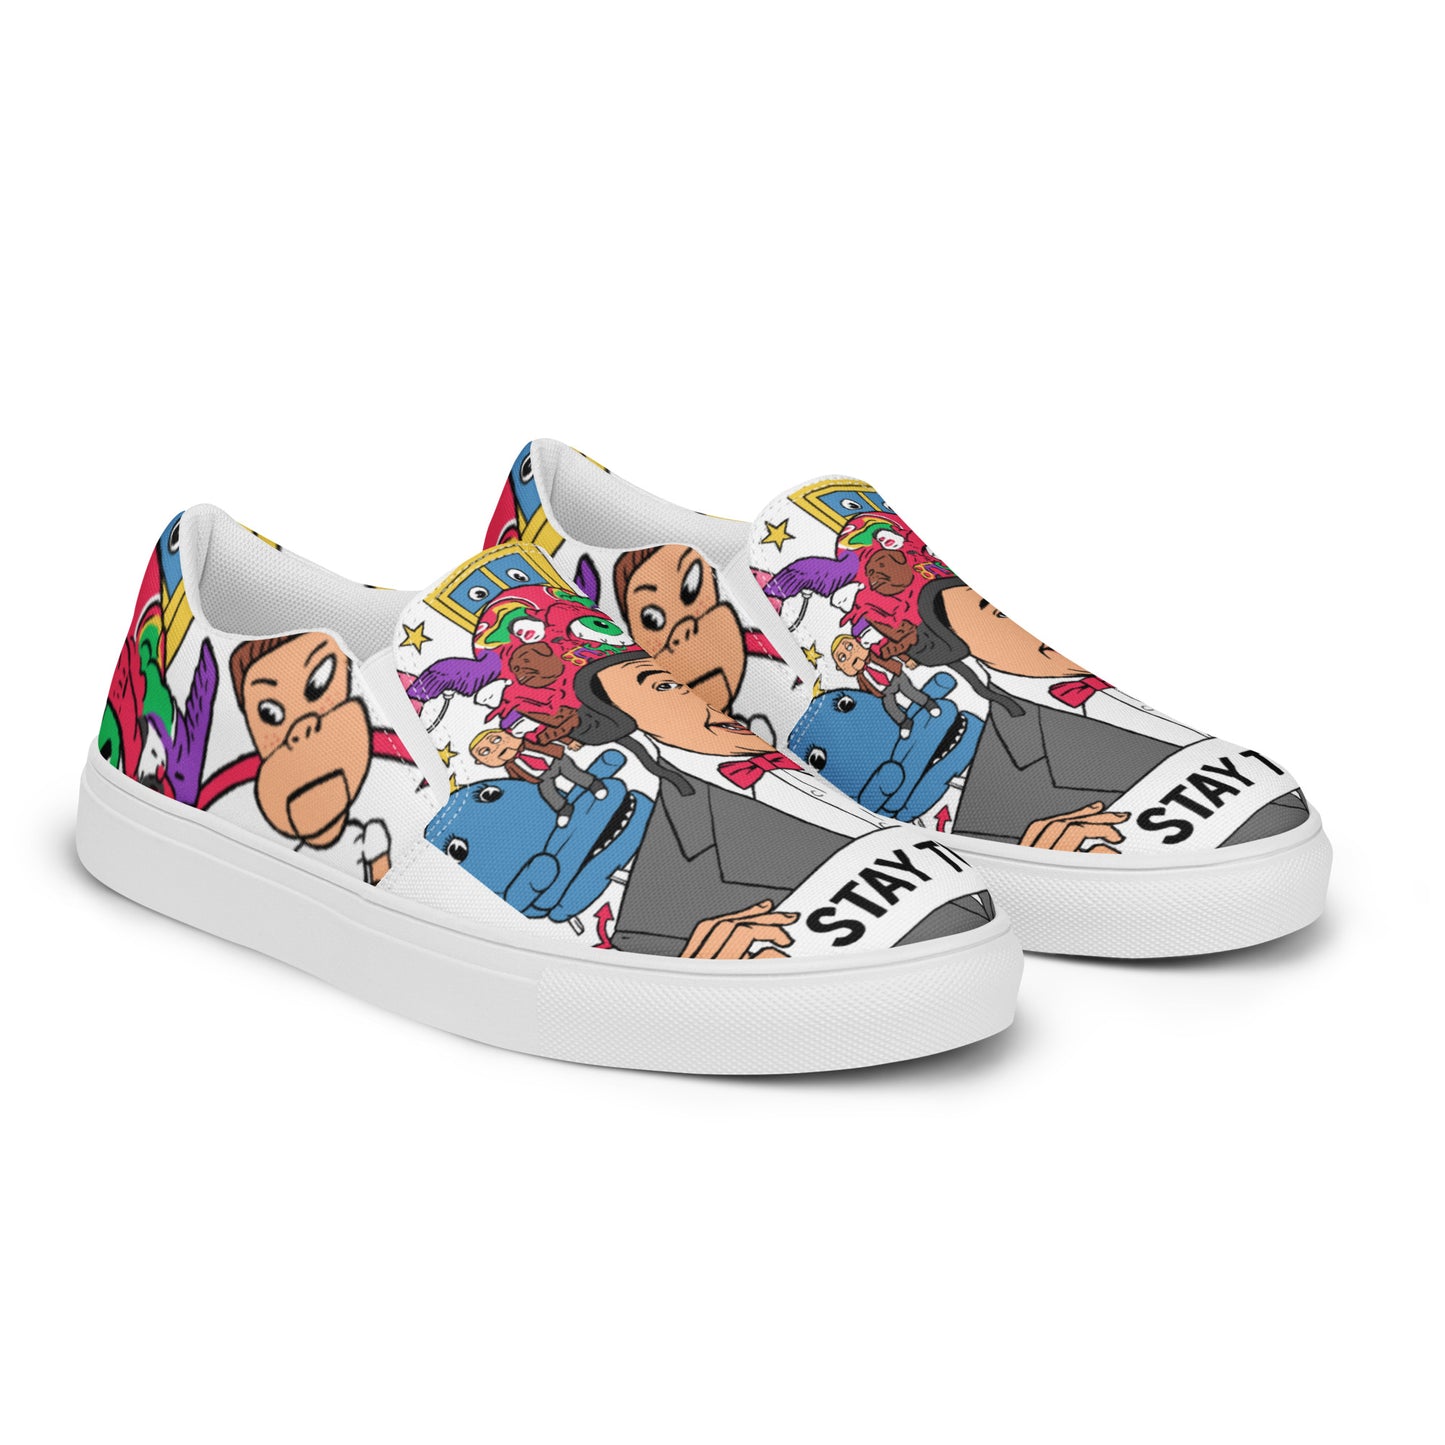 PLAYHOUSE (Men’s Slip-On Canvas Shoes)